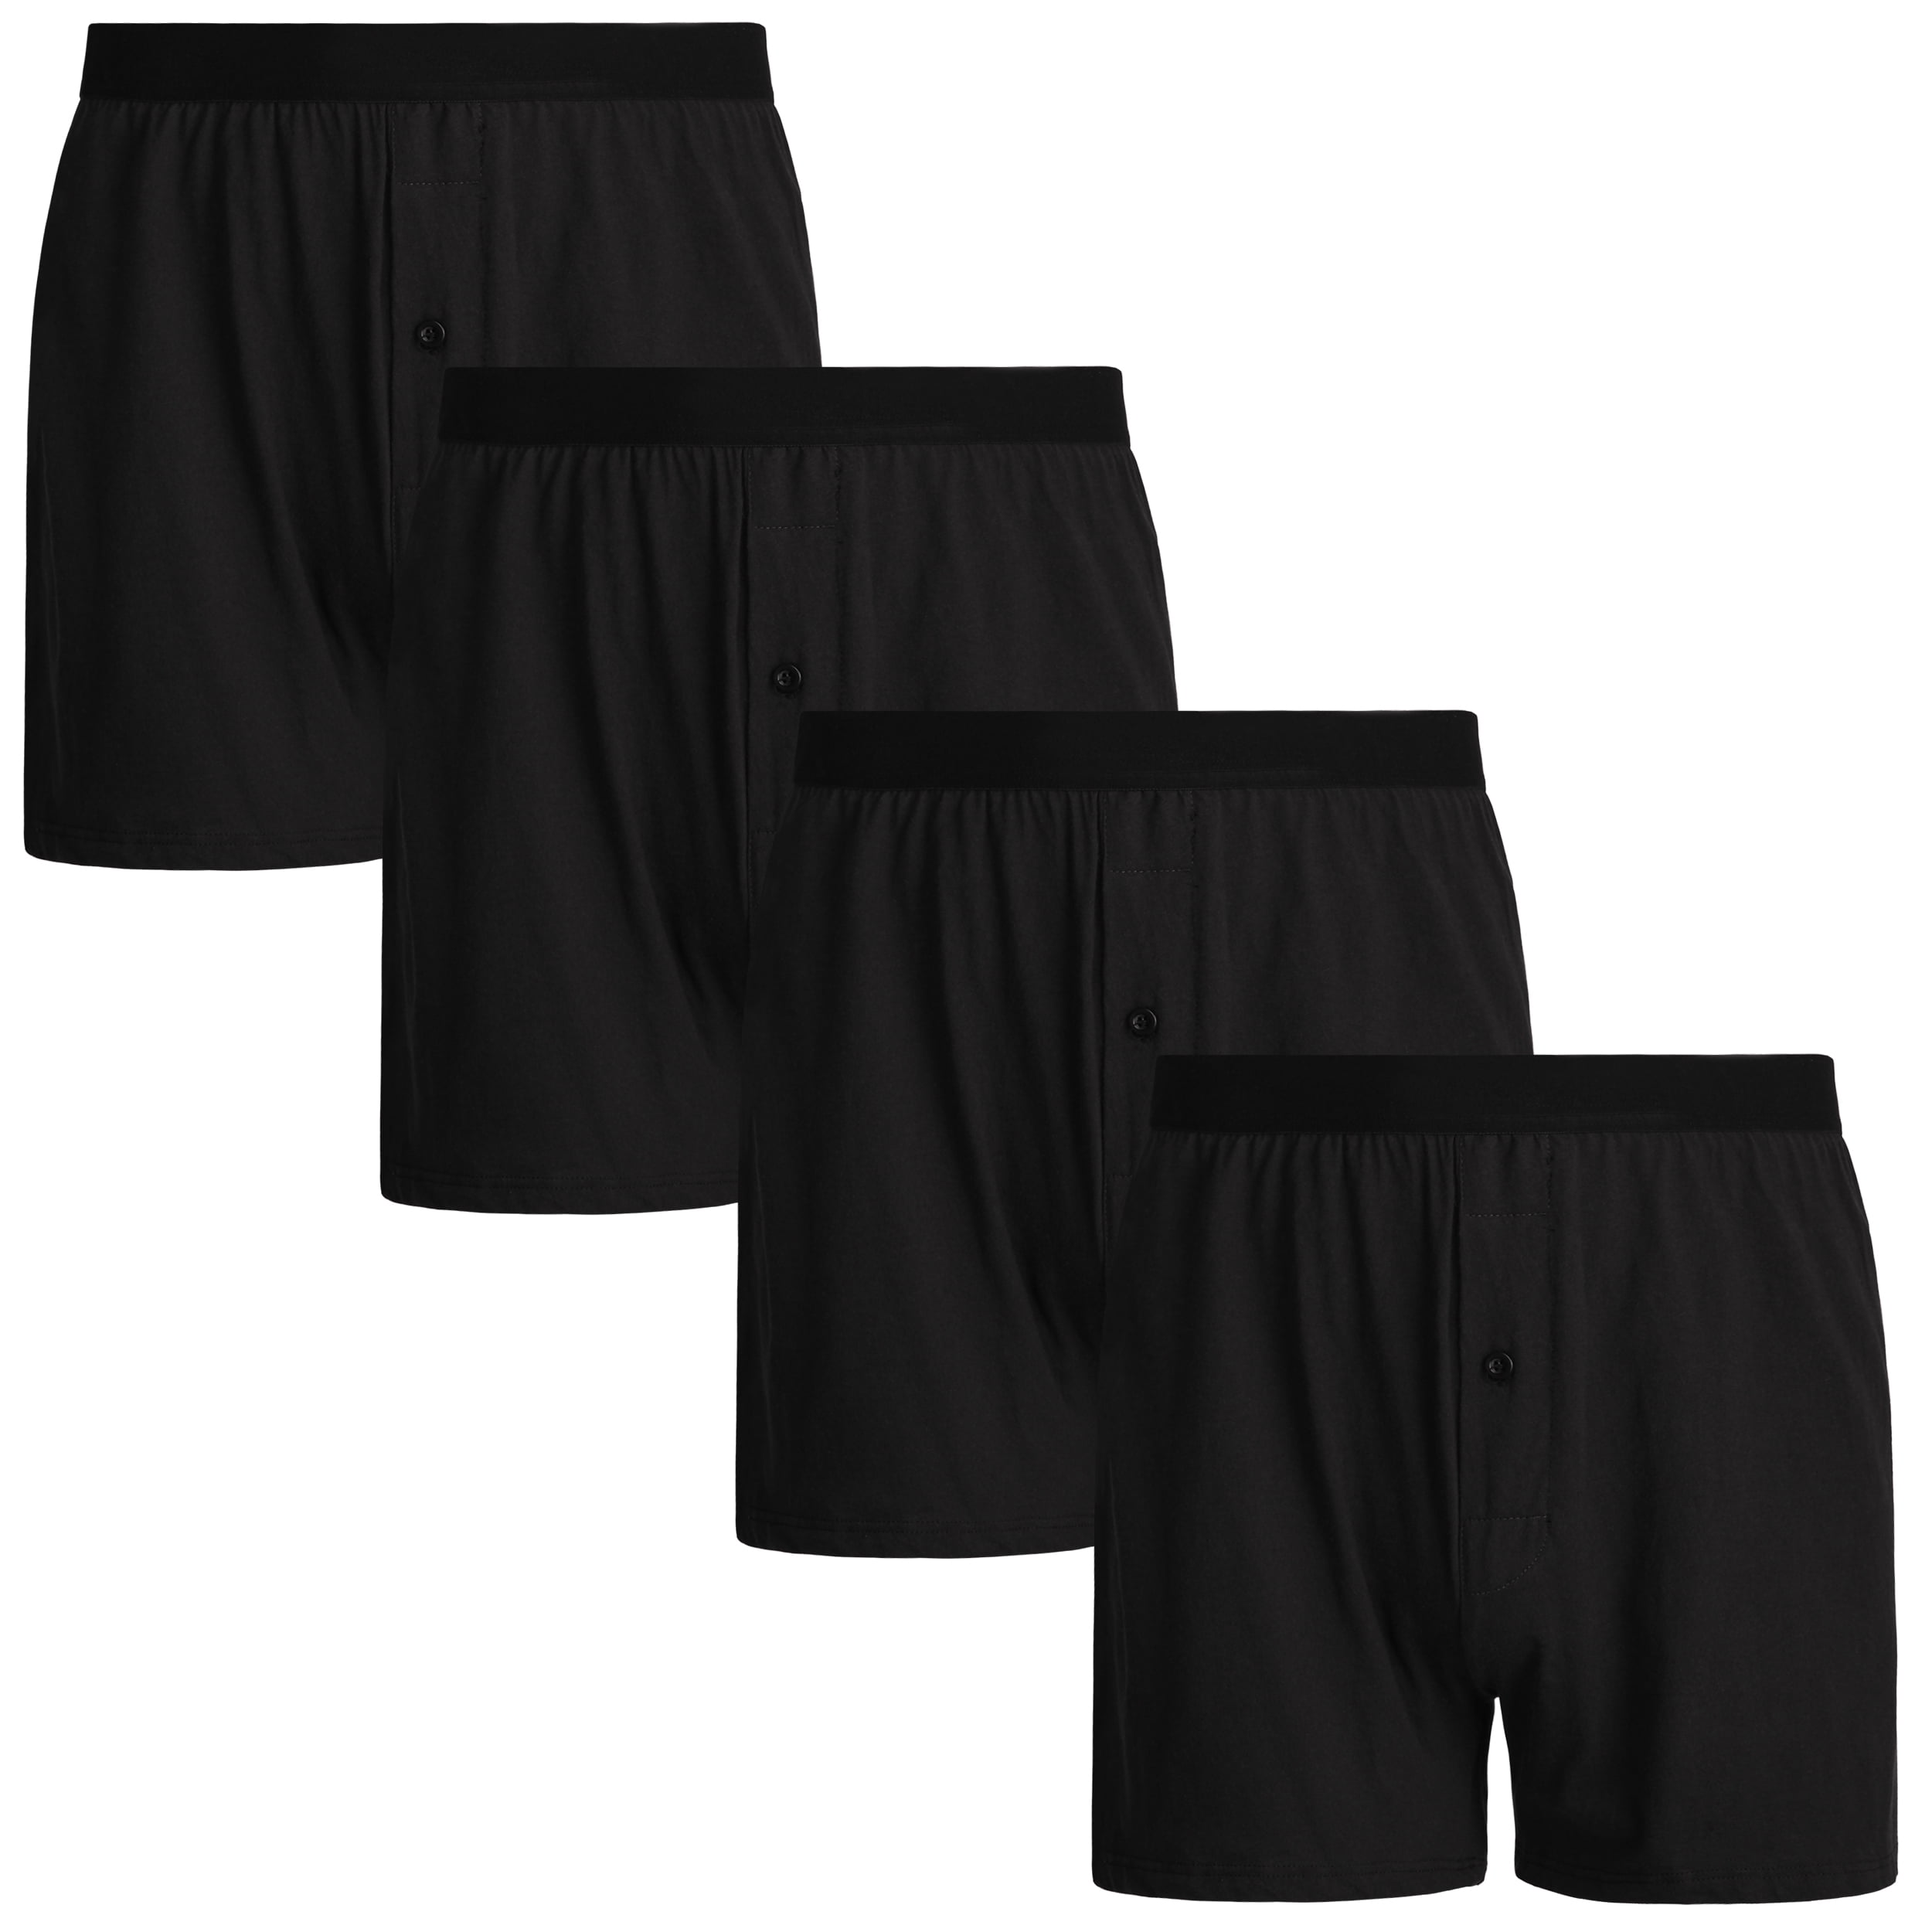 cotton rich 3 x mens boxer shorts pants BLACK & GREY NEW s/l/xl Pack of 3 